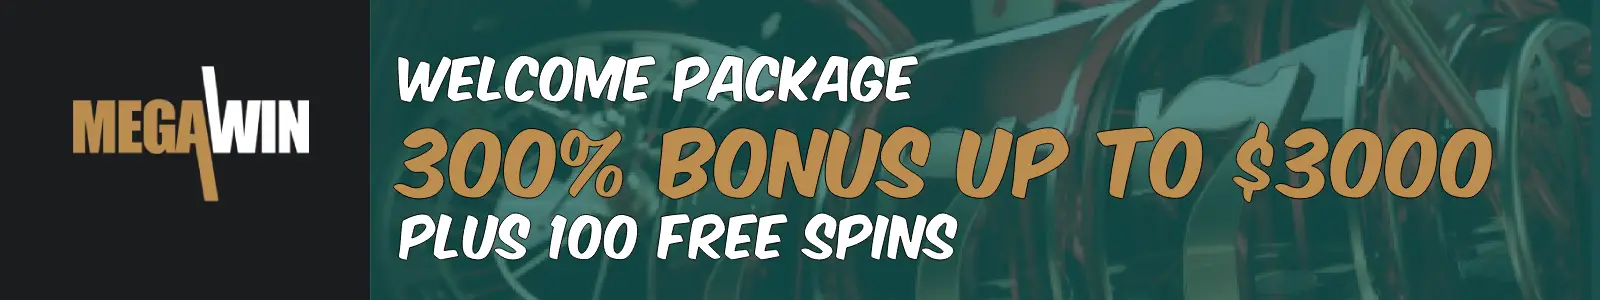 Megawin Casino welcome bonus